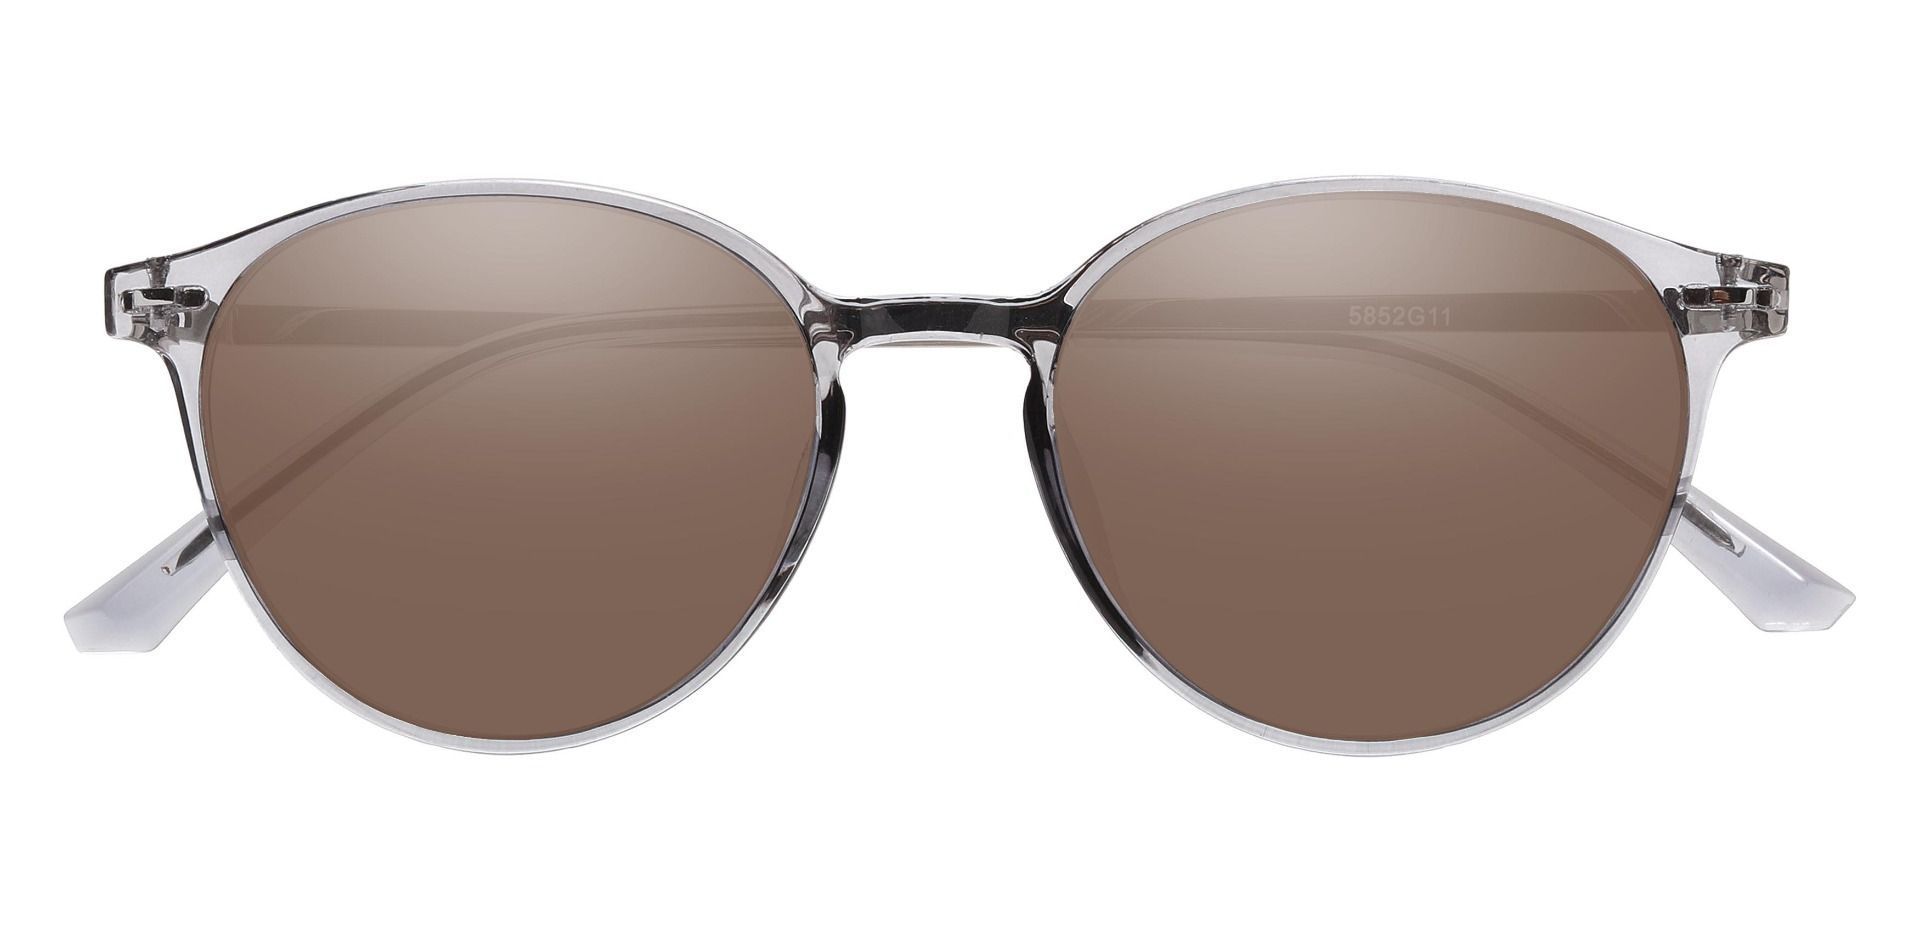 Springer Round Reading Sunglasses - Gray Frame With Brown Lenses